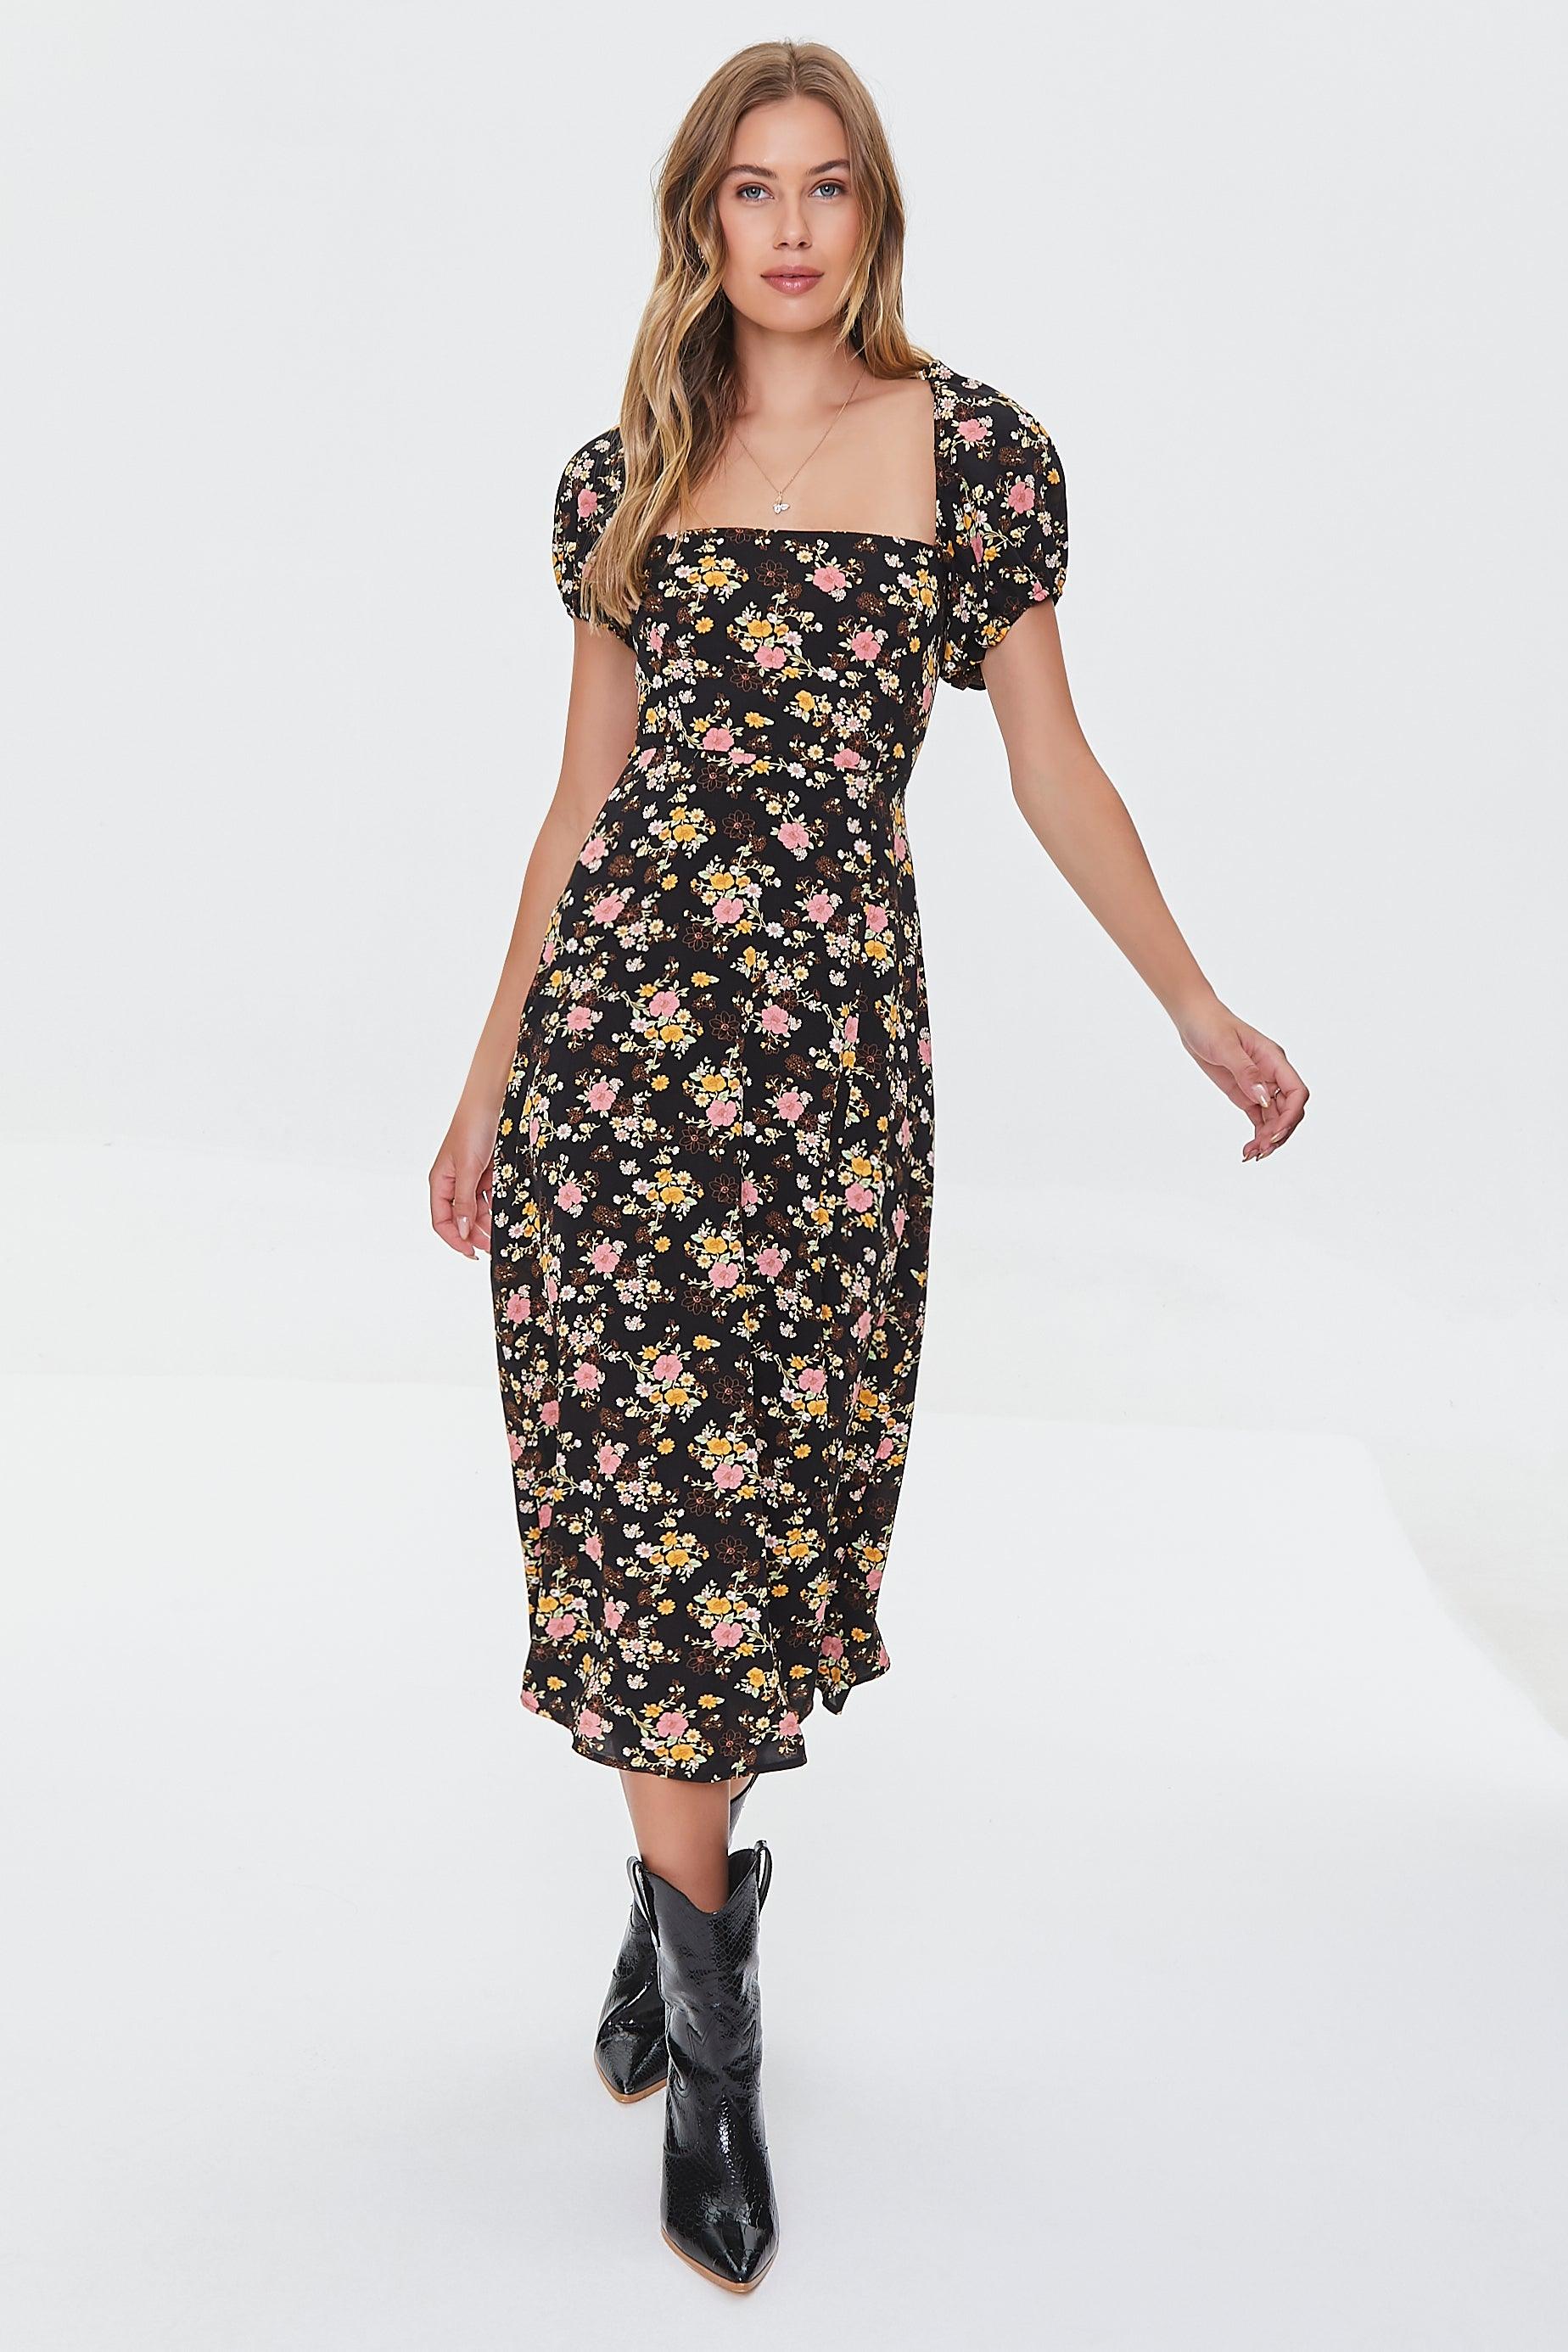 Blackmulti Floral Print Lace-Back Satin Dress 